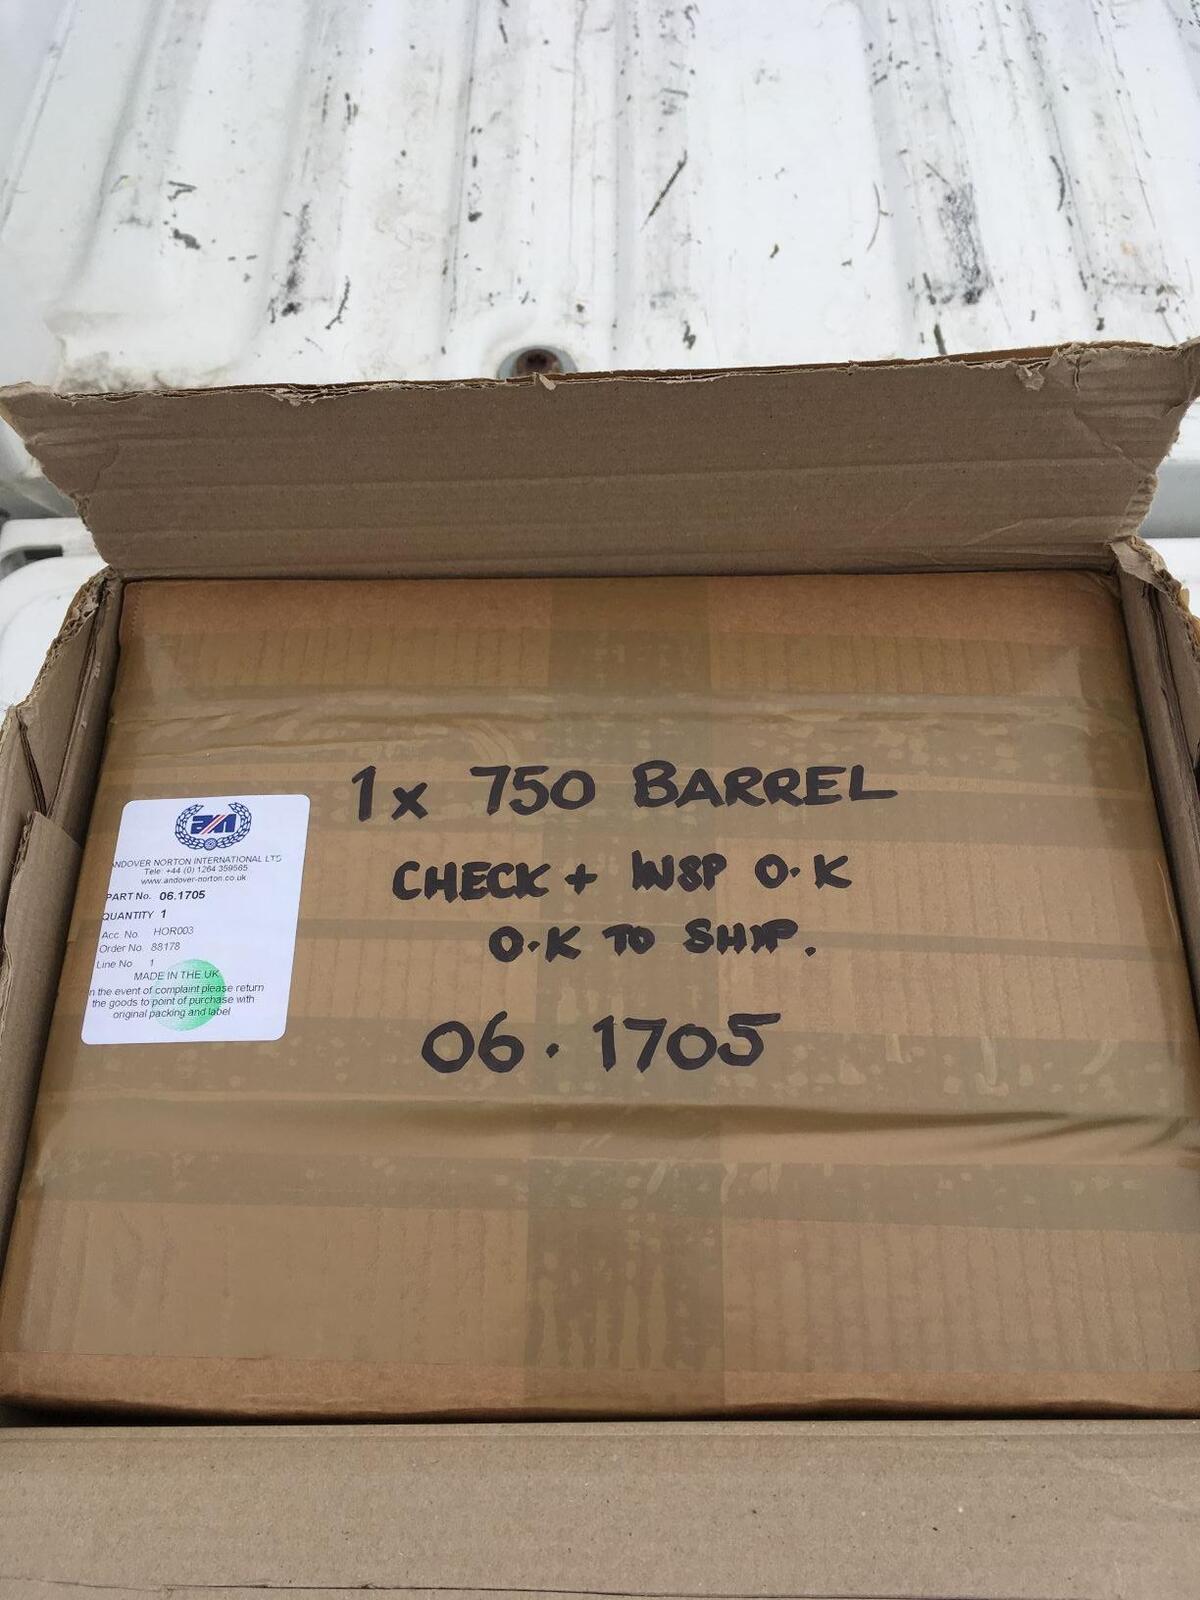 Shipping the barrel